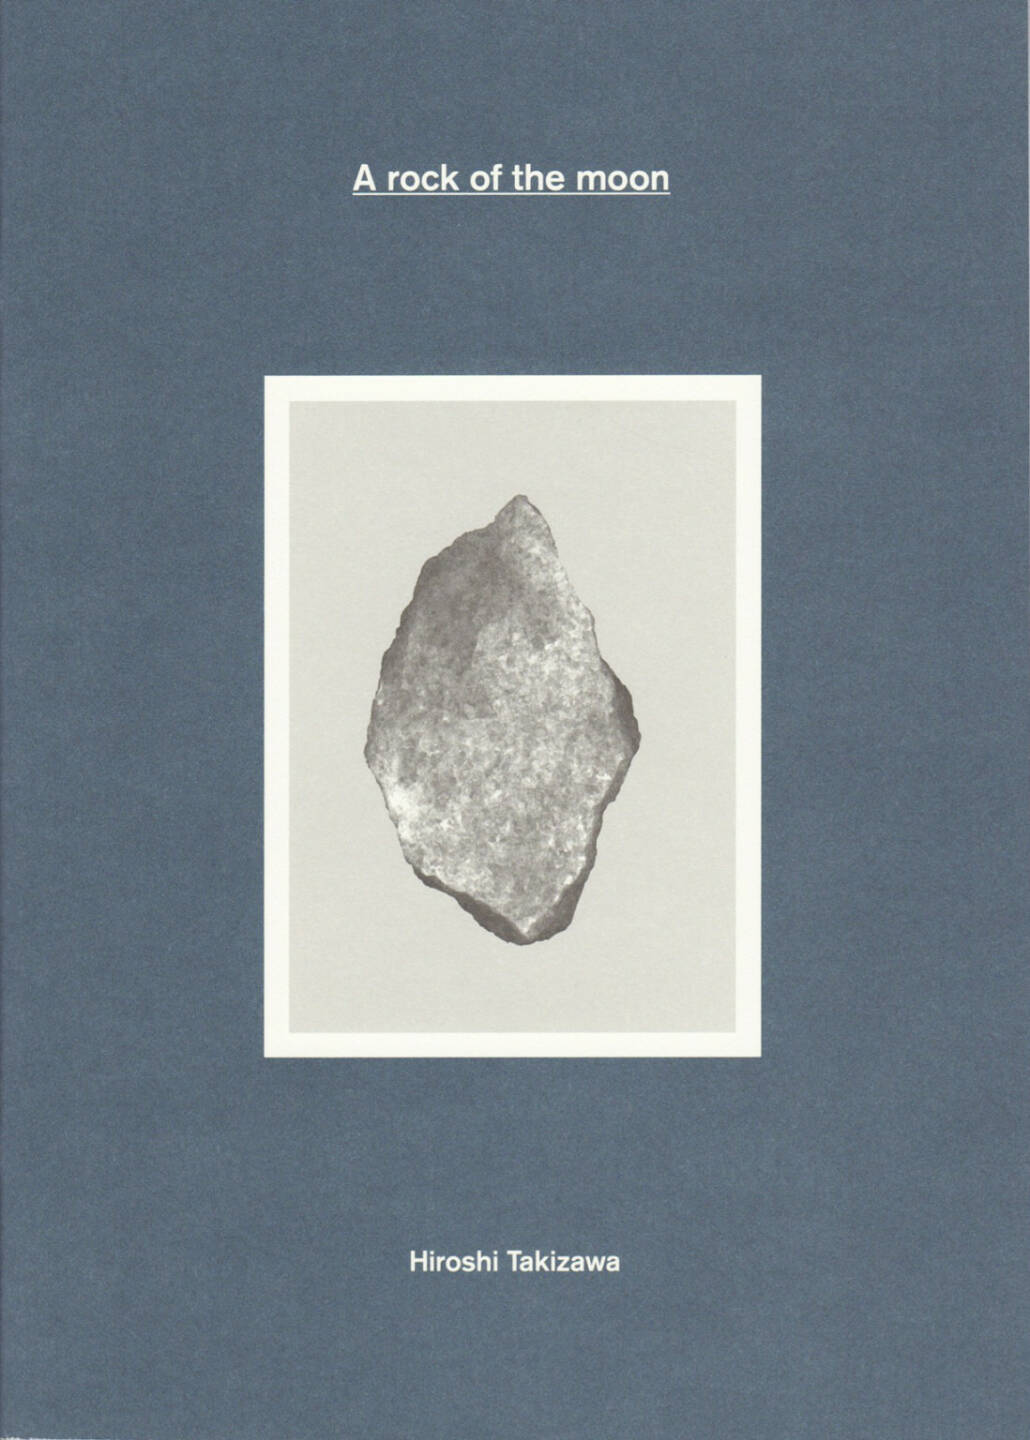 Hiroshi Takizawa - A rock of the moon (new version), Self published 2014, Cover - http://josefchladek.com/book/hiroshi_takizawa_-_a_rock_of_the_moon_new_version